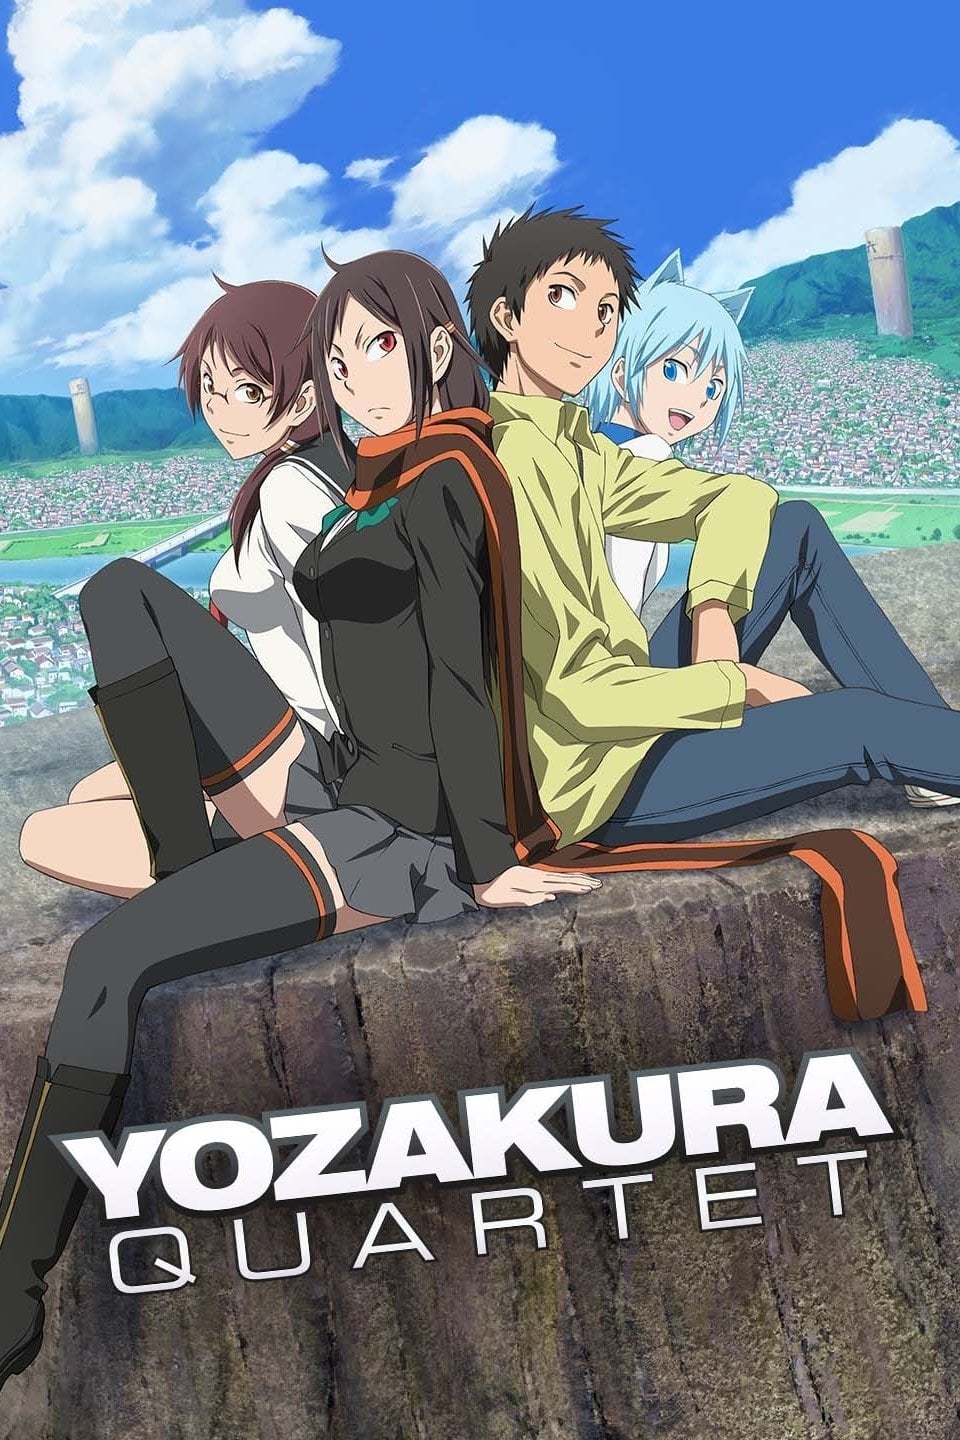 Yozakura Quartet S1